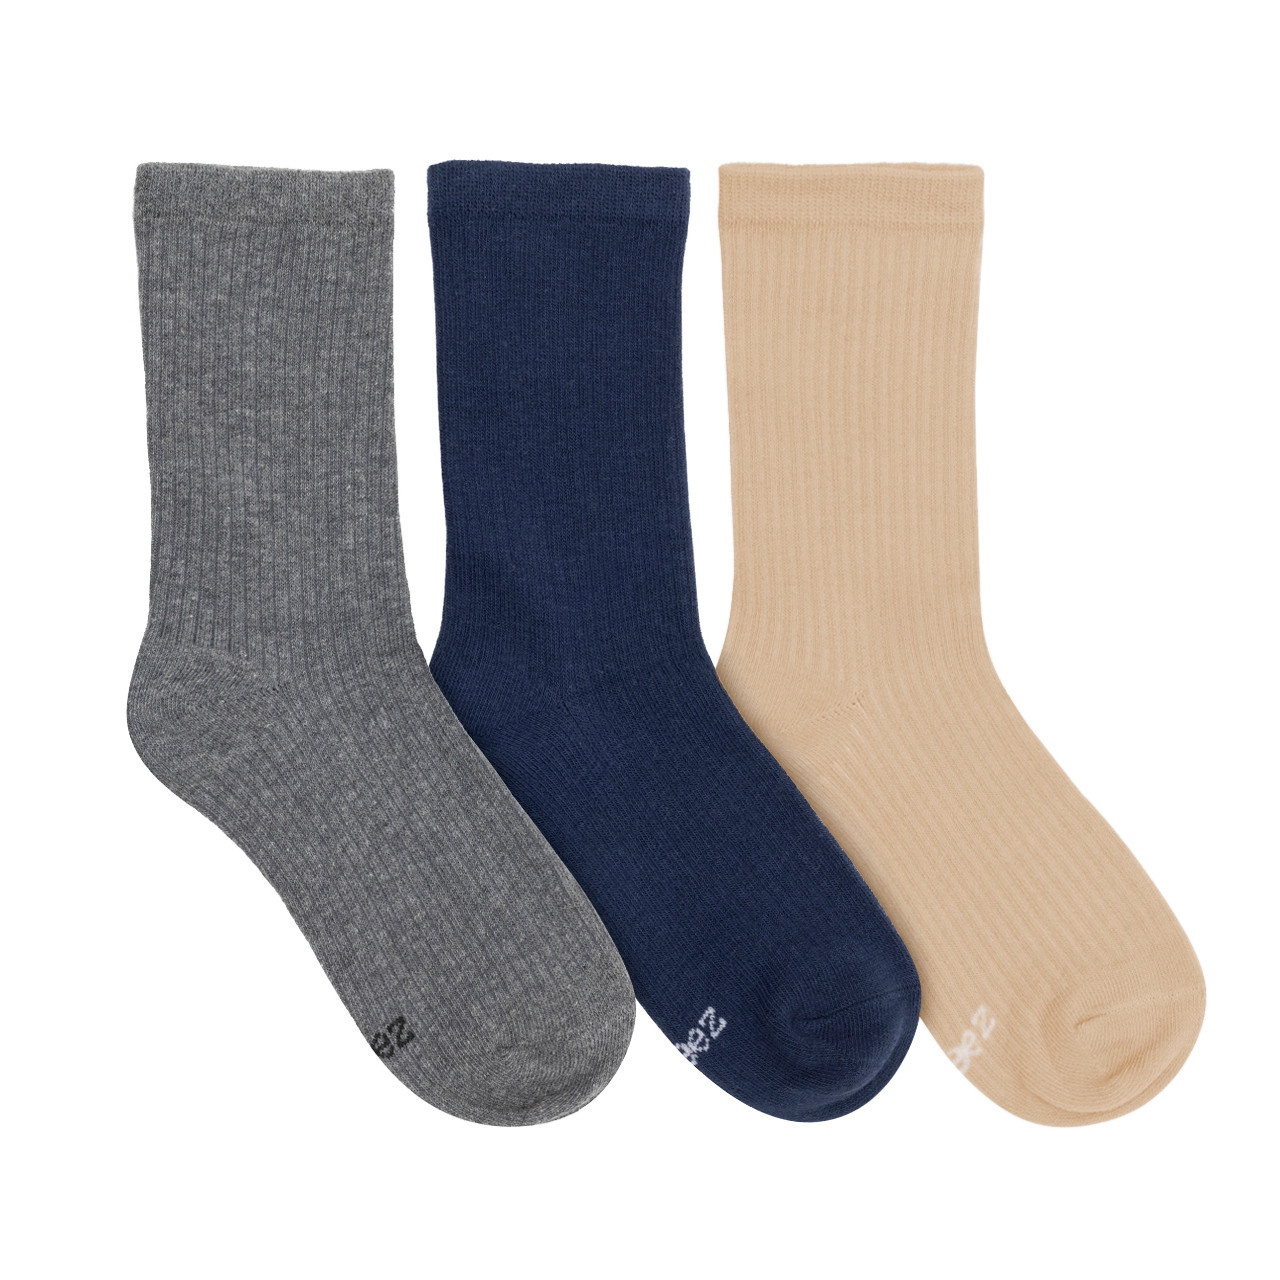 Robeez 3pk Socks - Shoe Size 3-7